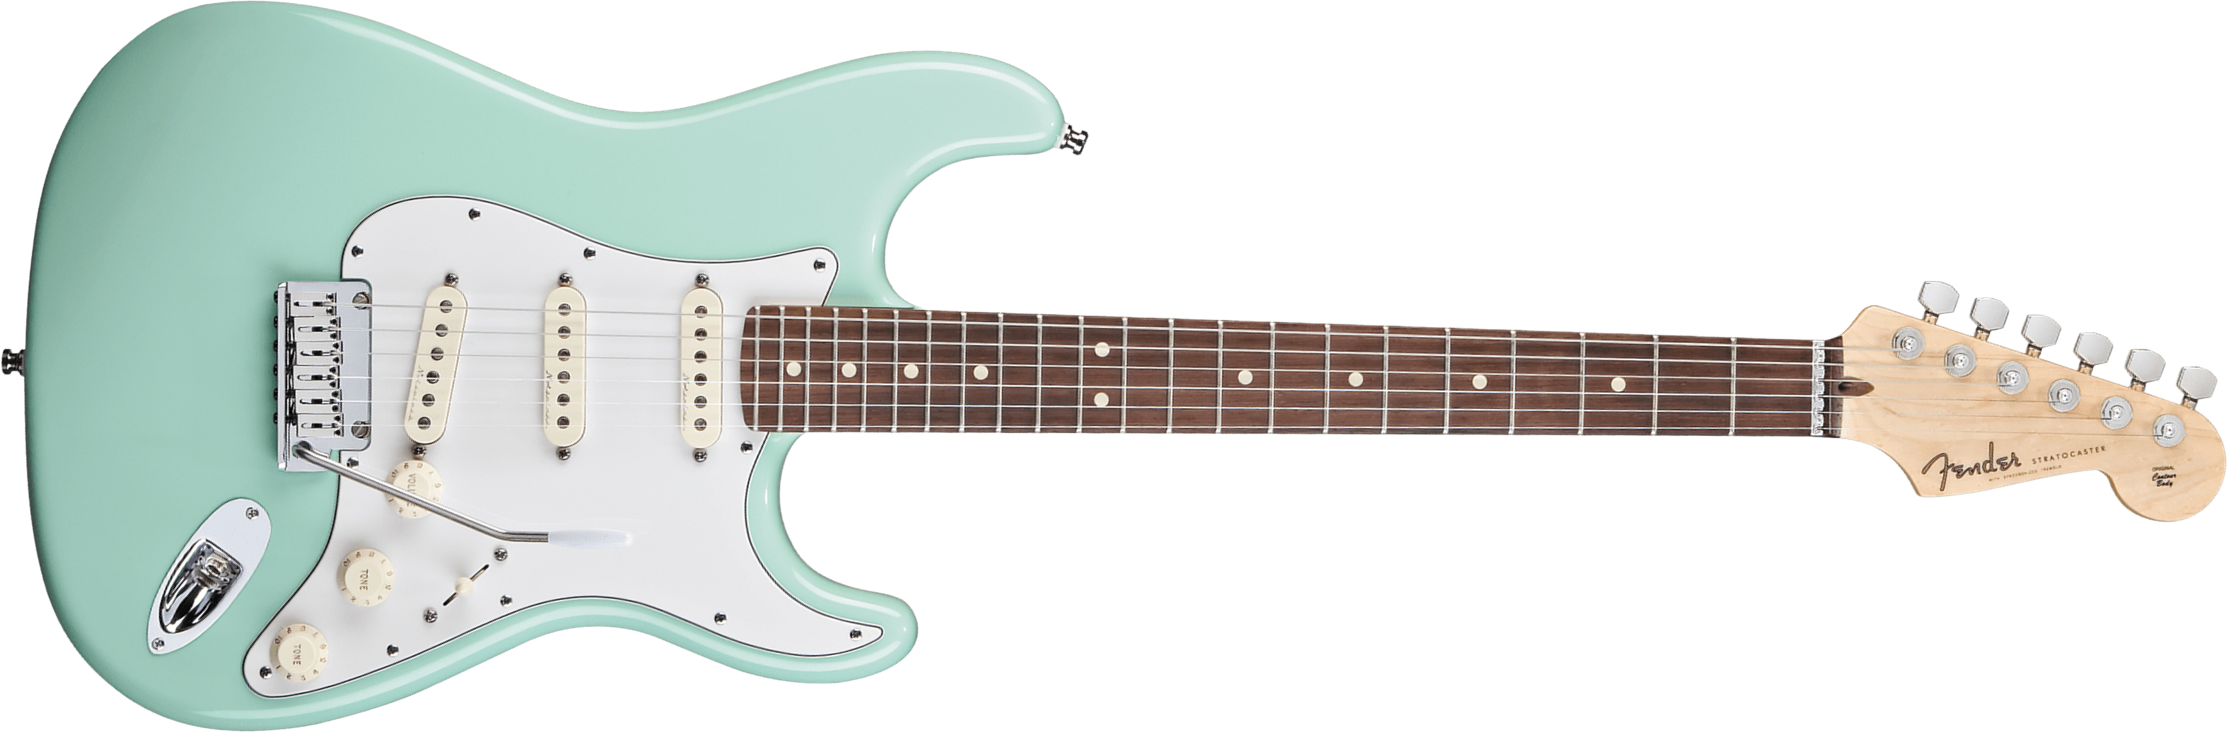 Fender Custom Shop Jeff Beck Strat 3s Trem Rw - Nos Surf Green - Guitare Électrique Forme Str - Main picture